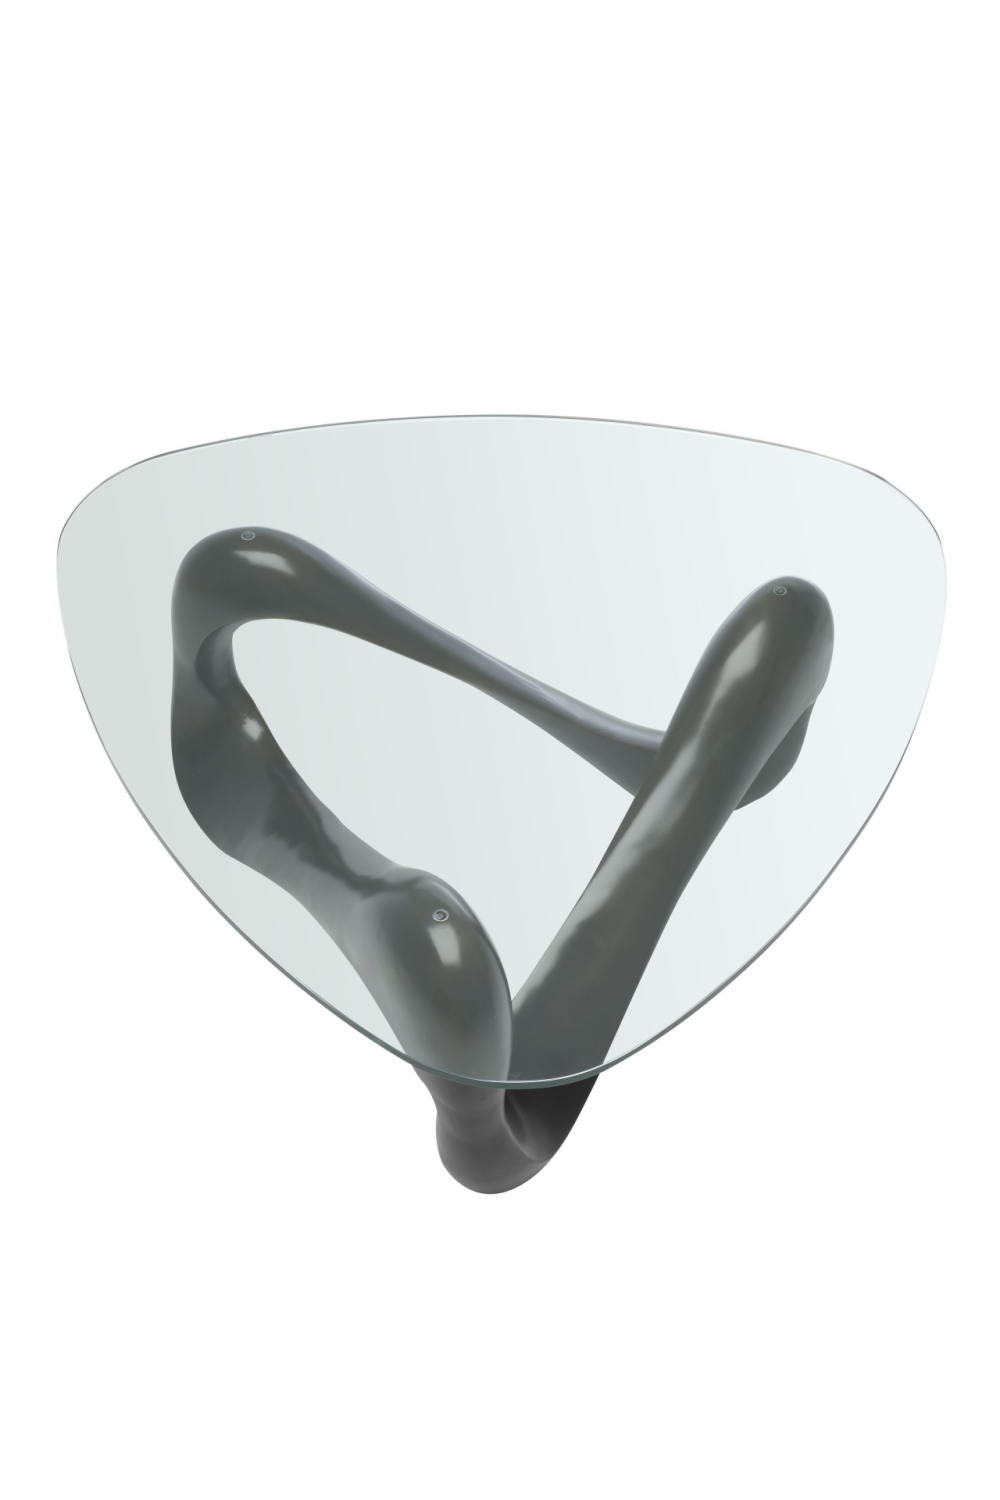 Bronze Clear Glass Coffee Table | Eichholtz Aventura | OROA